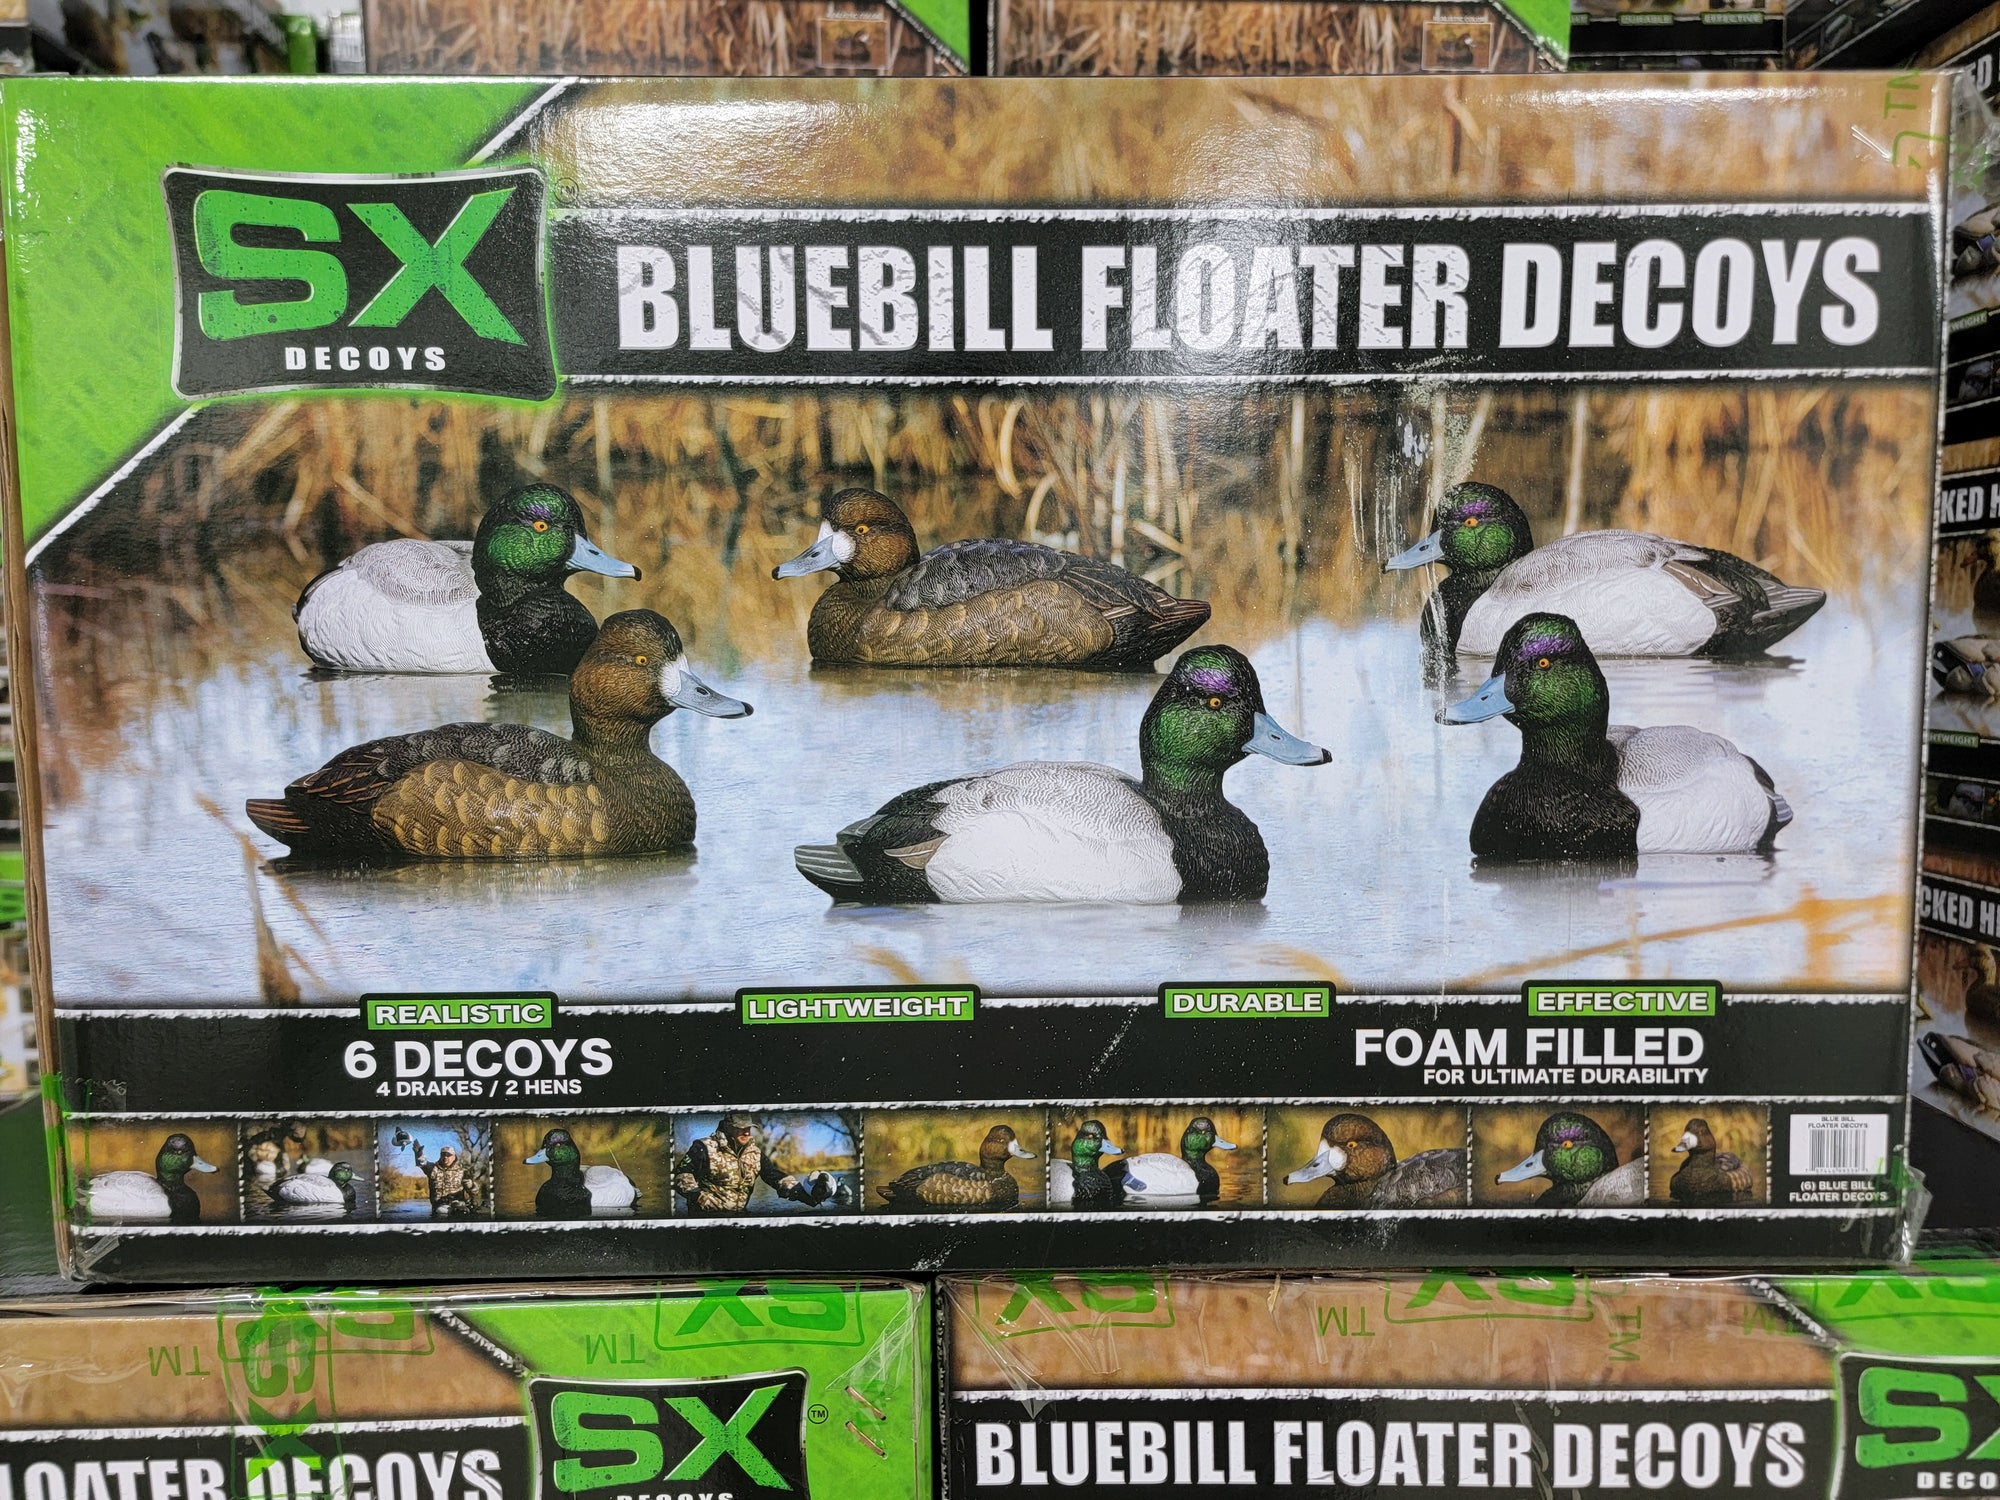 SX bluebill decoys